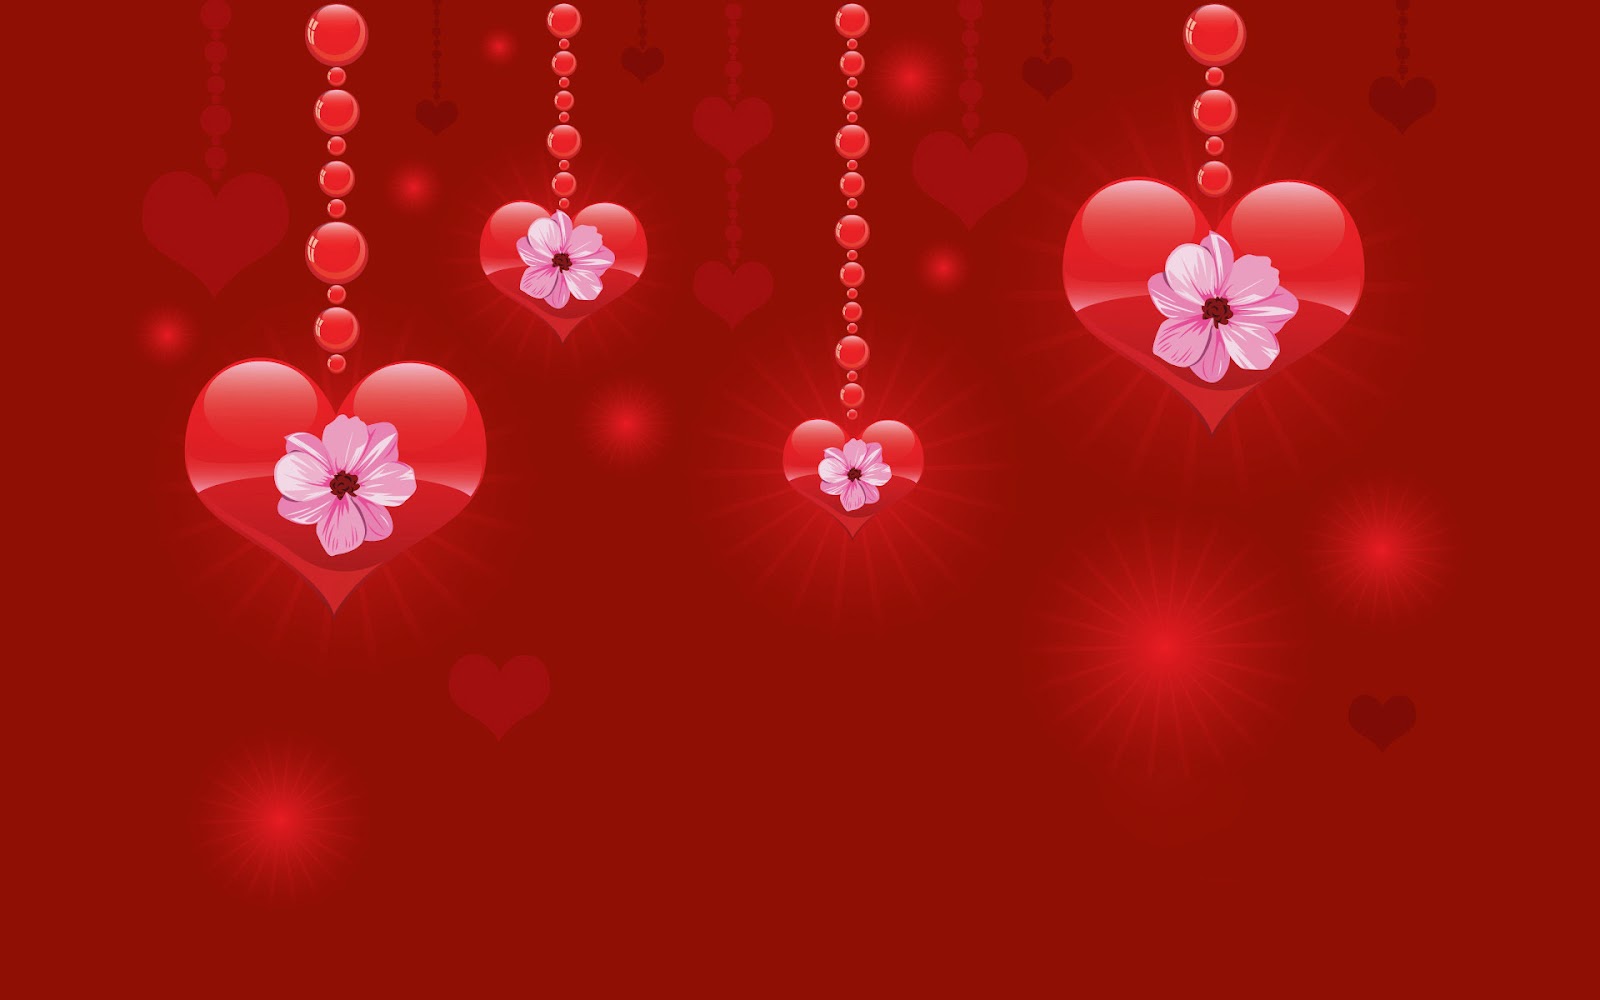 Holidays Saint Valentines Day Heart at Valentines Day 020455 jpg